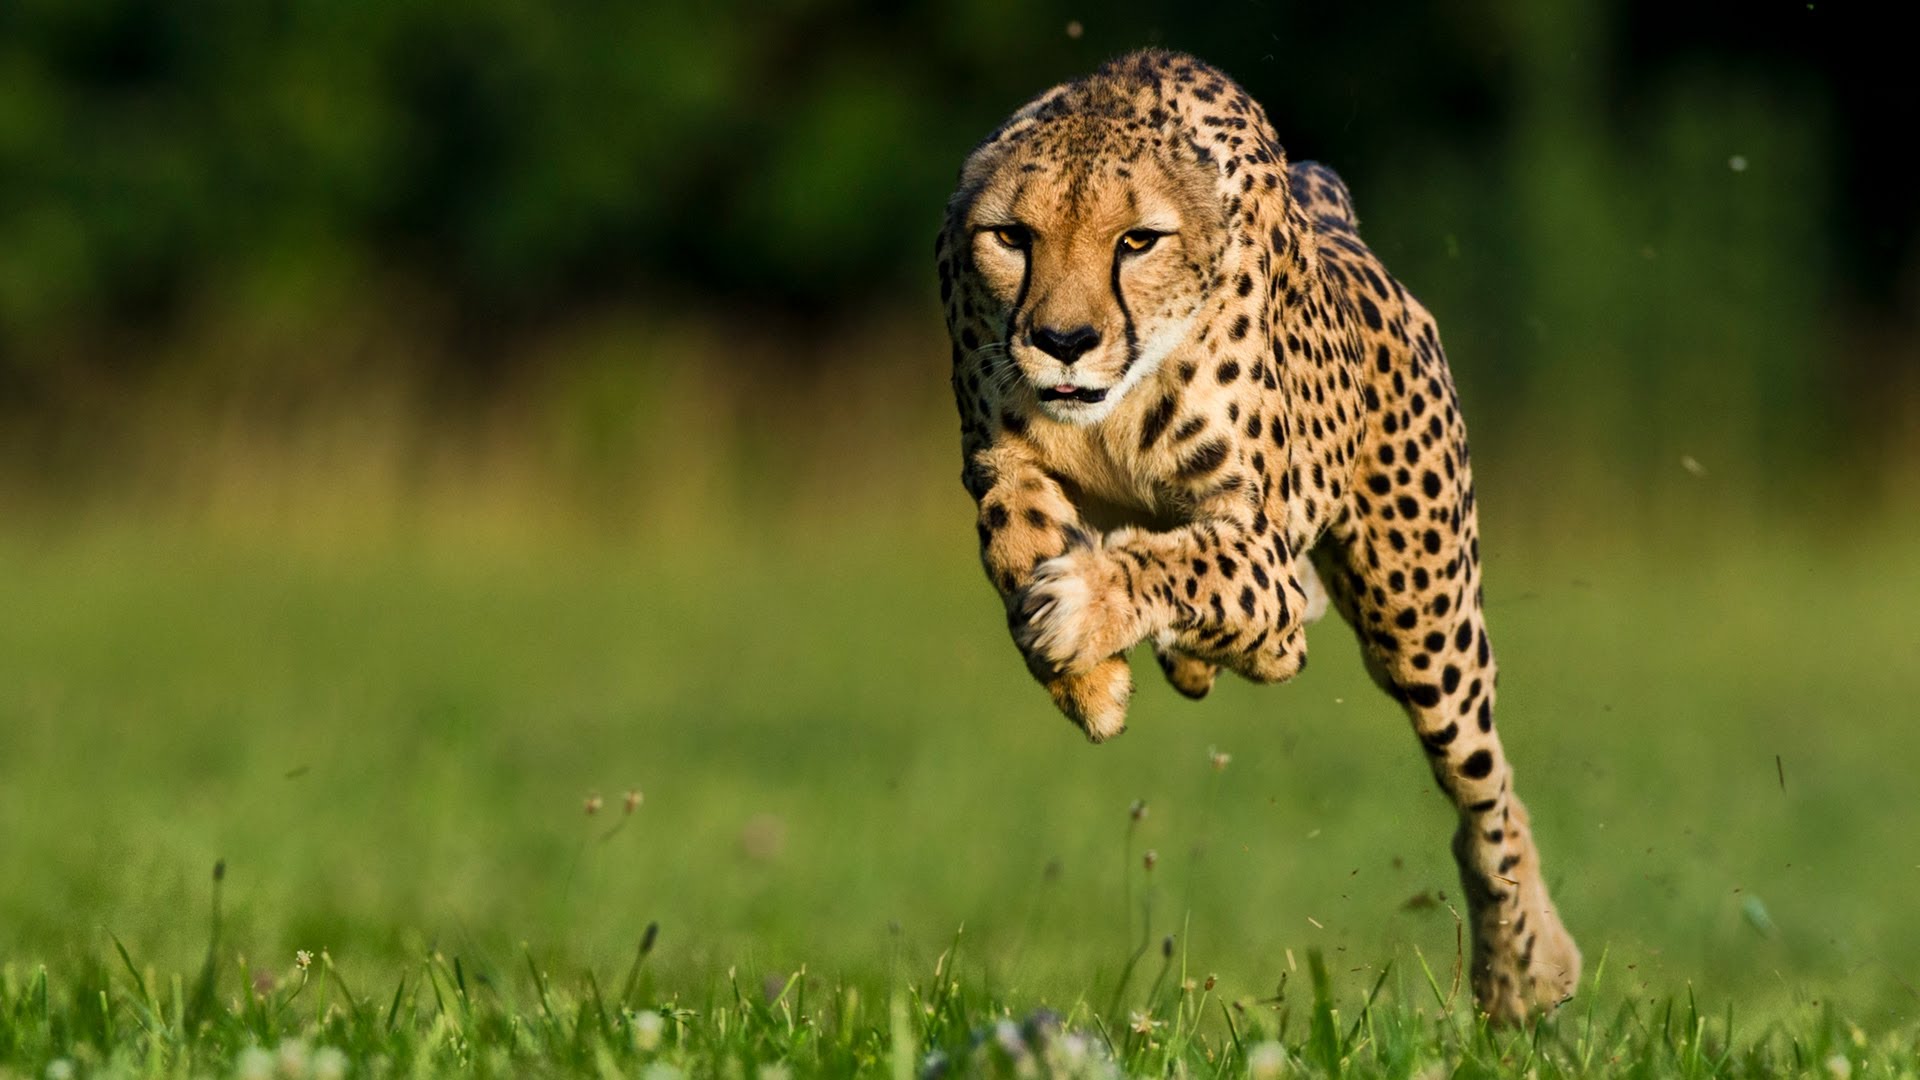 Cheetah Wallpaper HD photos download.